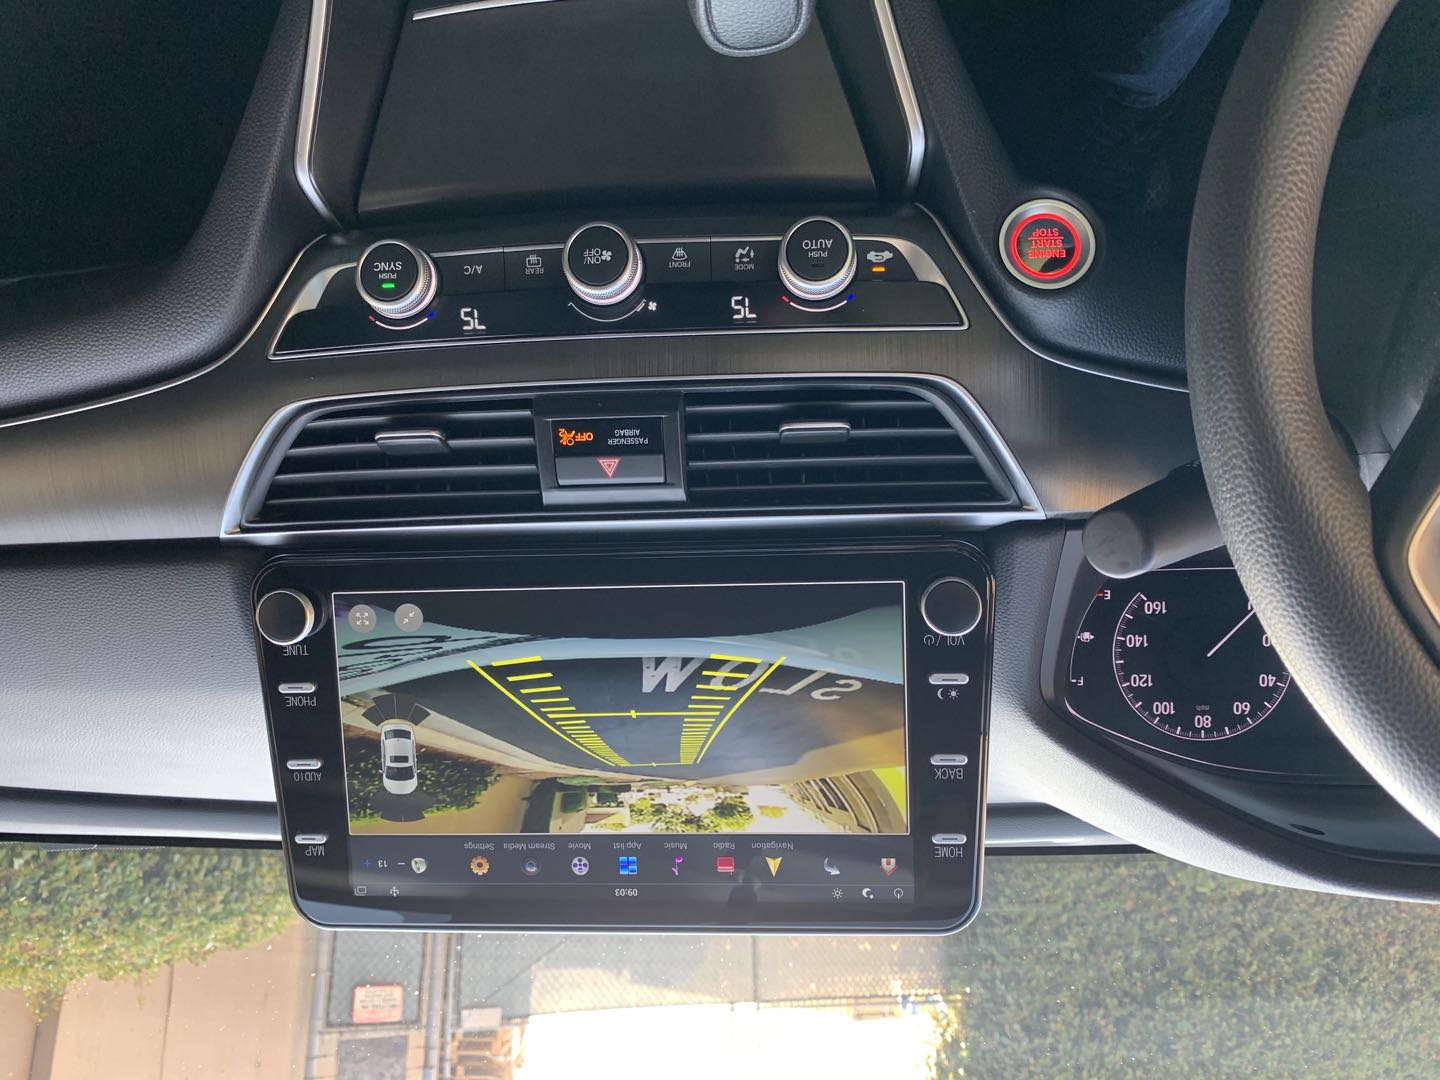 [Open-box] [Px6-Six core] 11.8" Android 9.0 Navigation Radio for Honda Accord 2018 - 2020-Phoenix Automotive